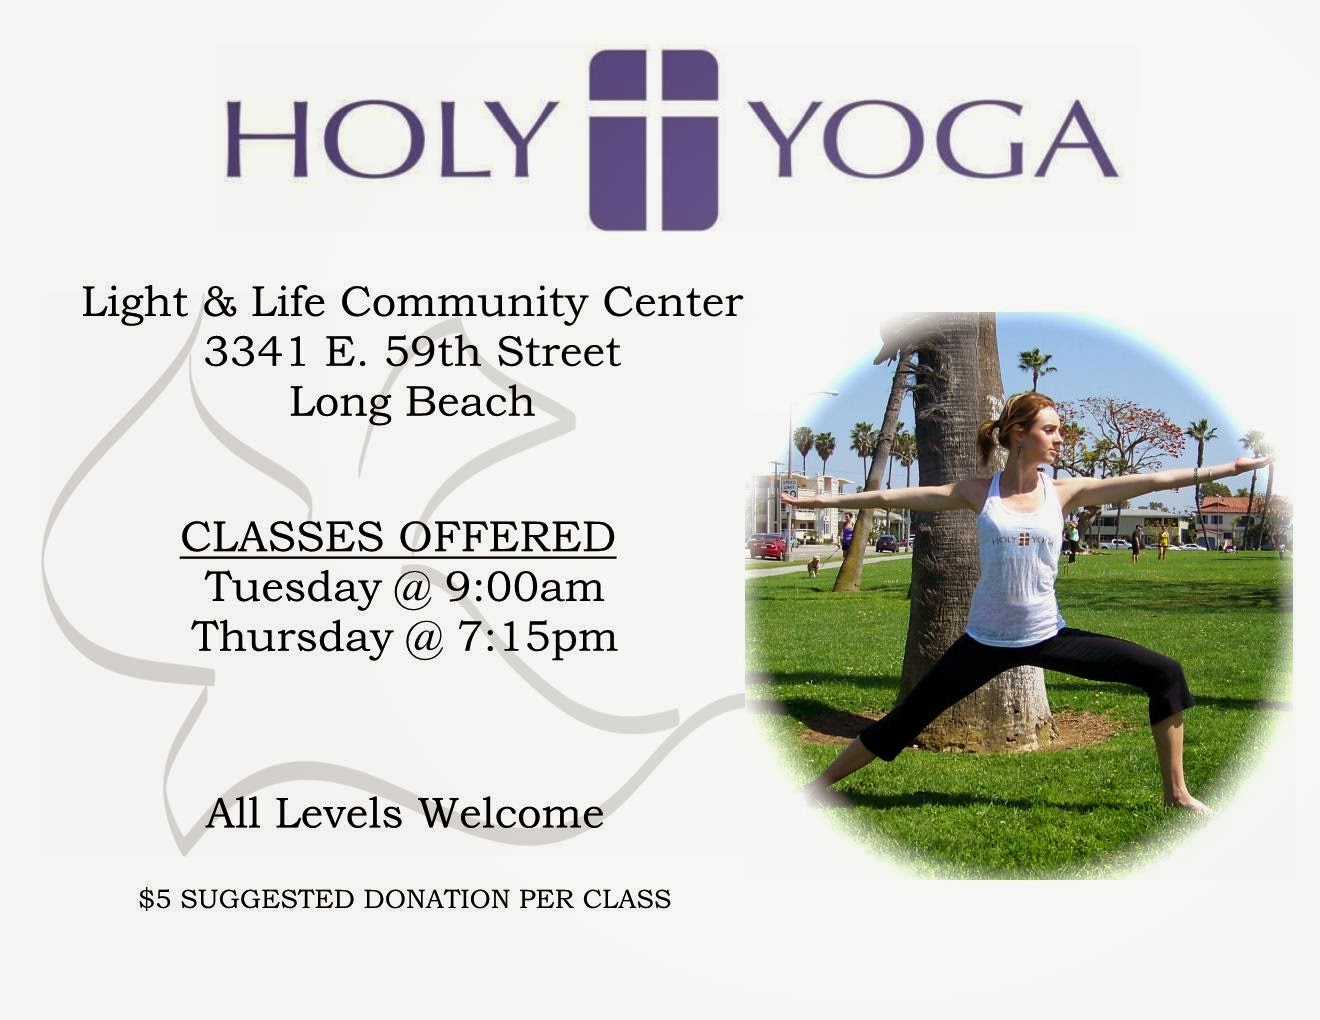 Holy Yoga in Long Beach